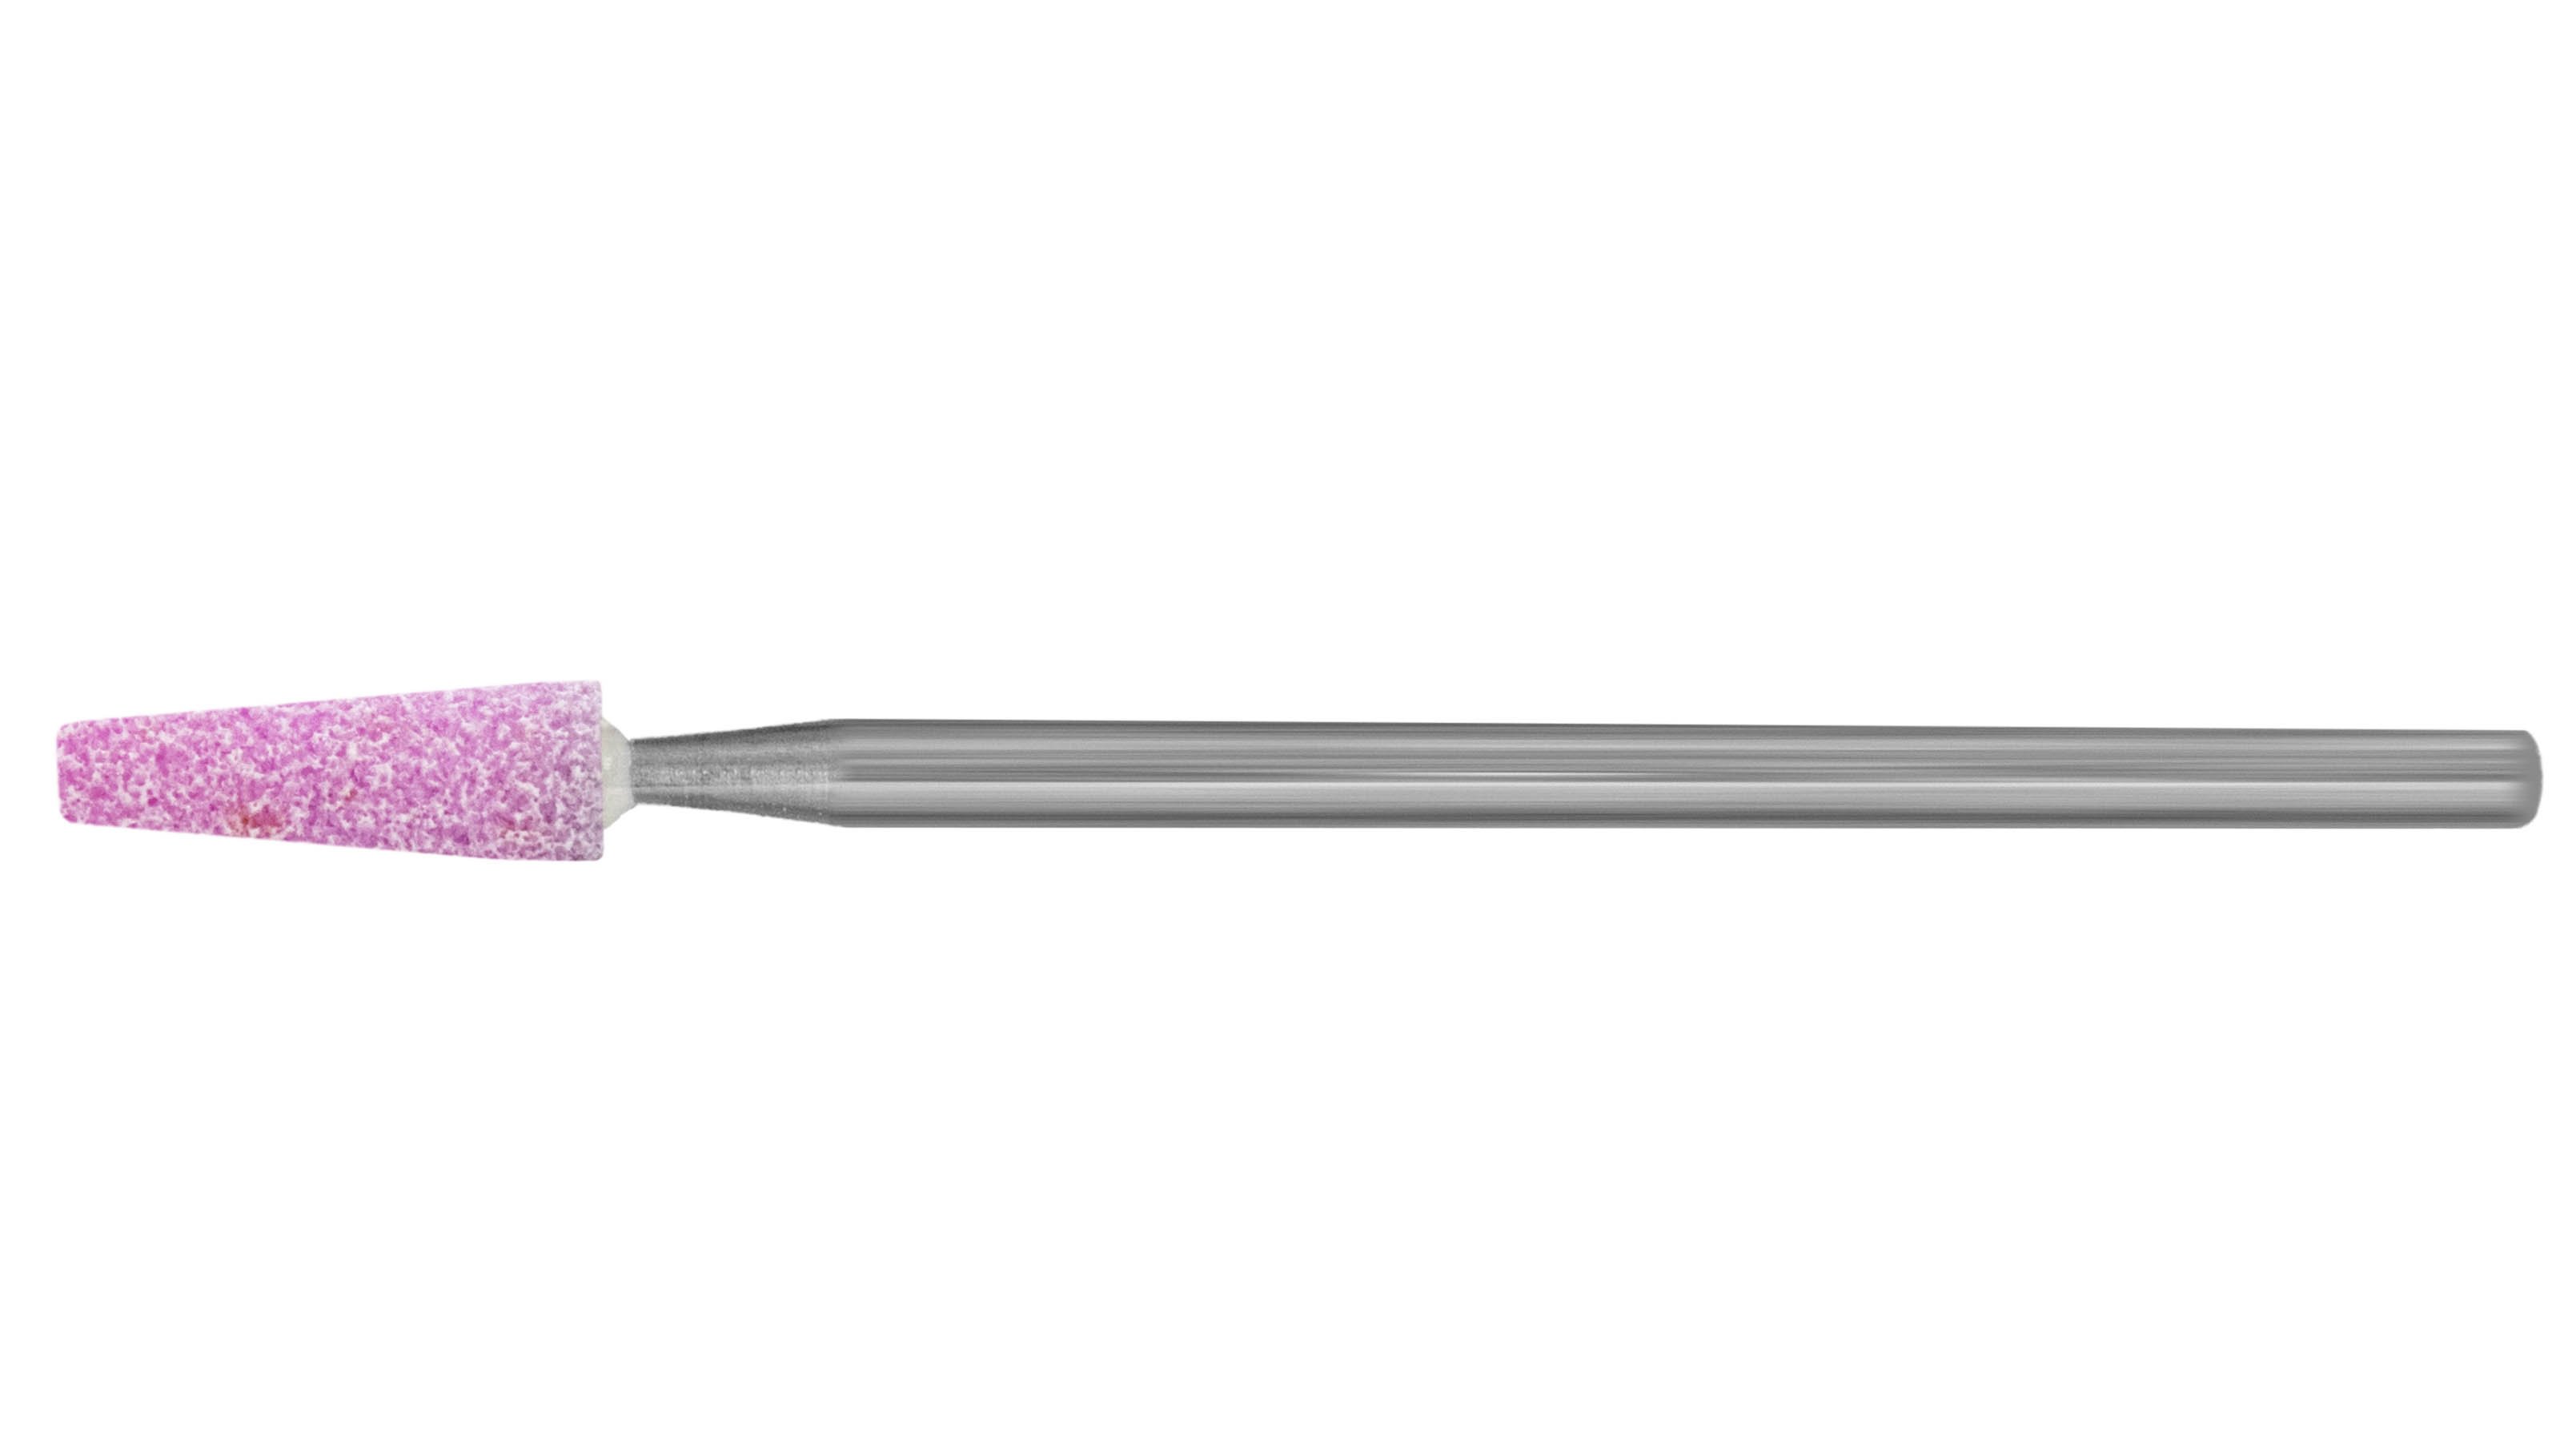 Keramischer Schleifer, Edelkorund, rosa, Kegelstumpf, Ø 3,5 x 10,5 mm, HP-Schaft